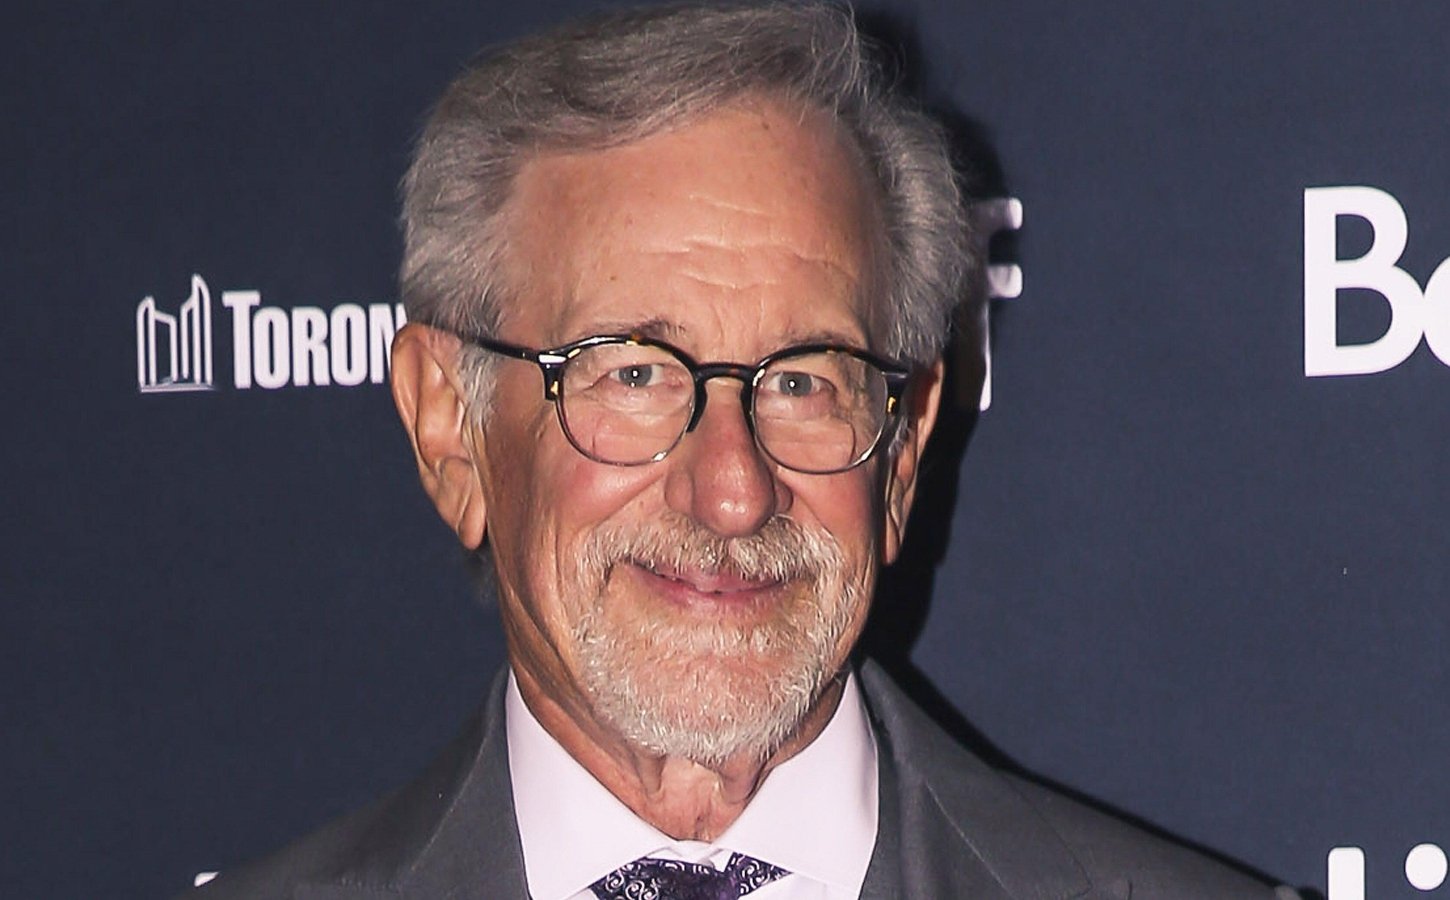 Steven Spielberg attends "The Fabelmans" Premiere during the 2022 Toronto International Film Festival